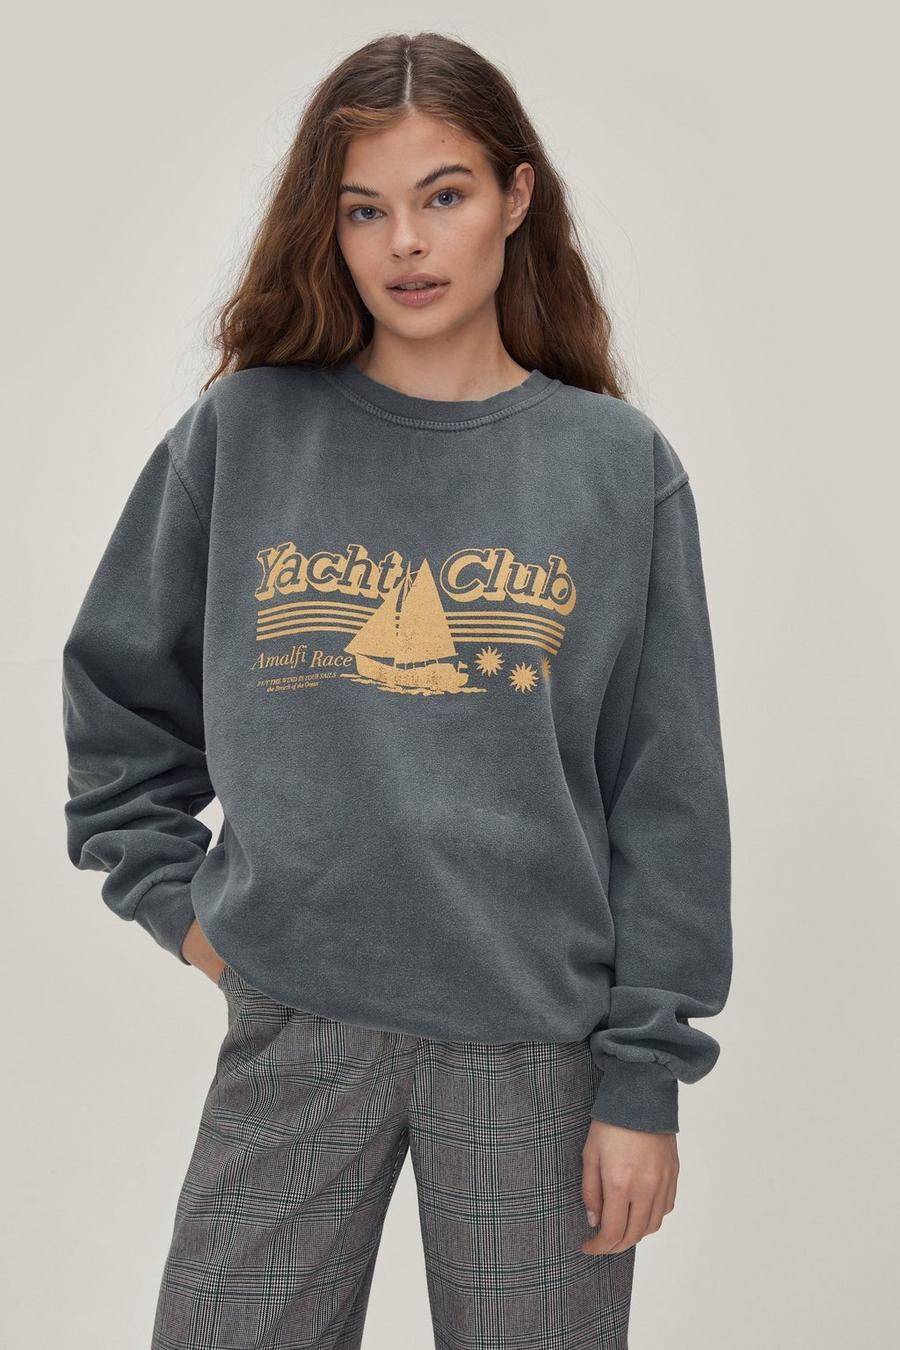 Yacht Club Crew Neck Graphic Sweatshirt